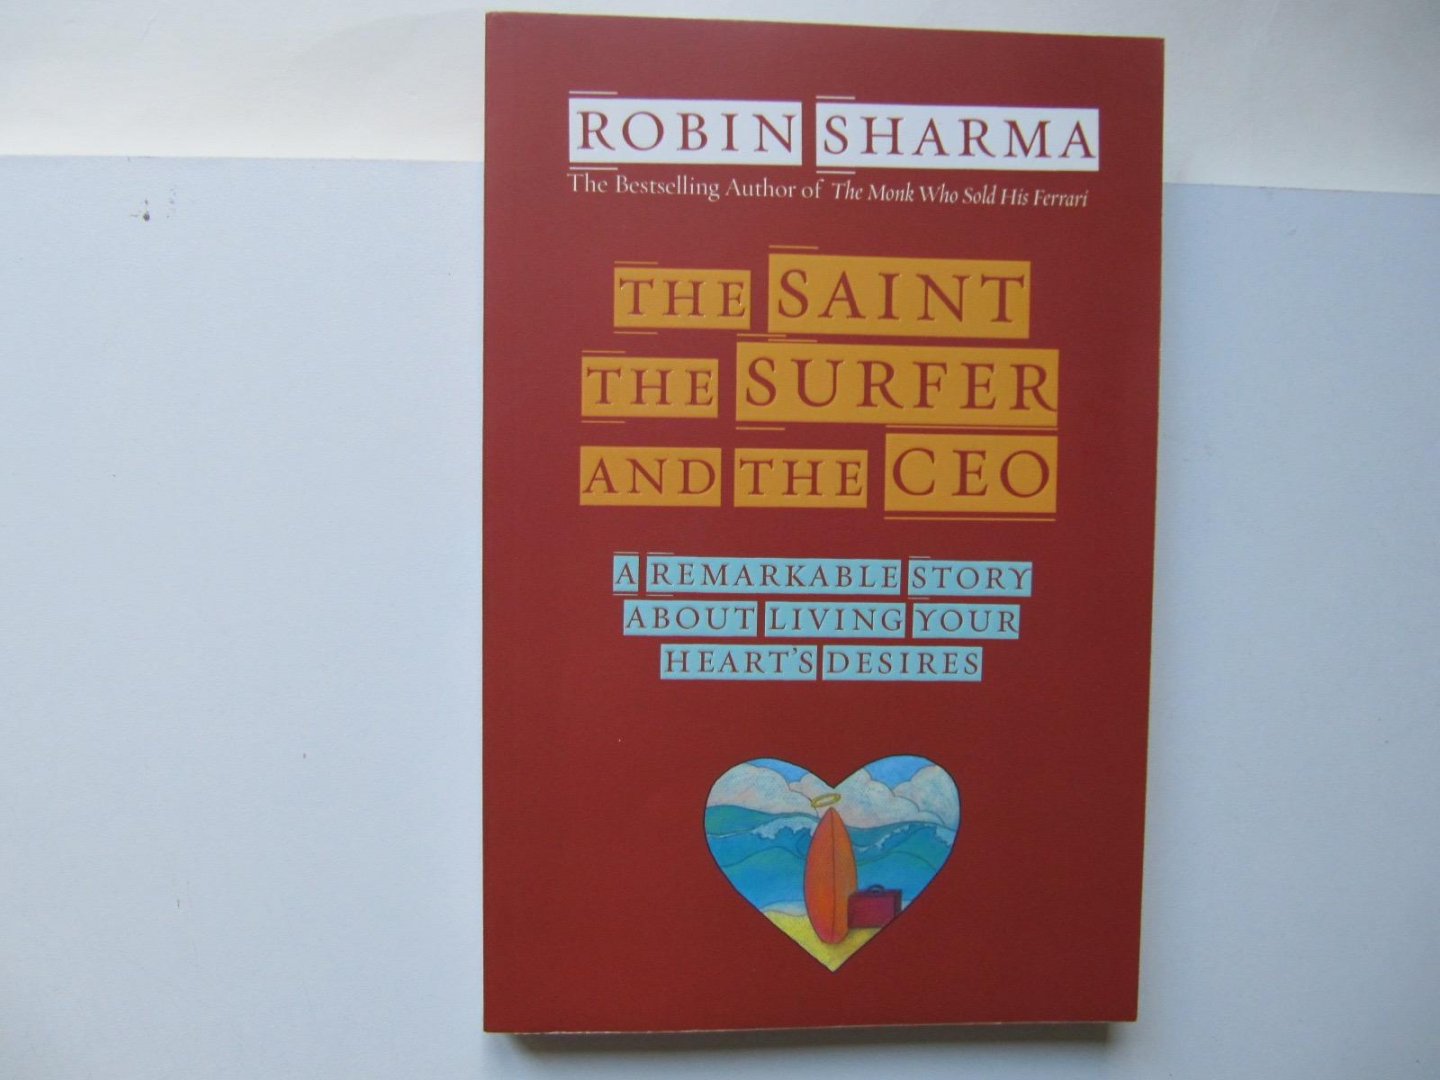 Robin Sharma - The Saint The Surfer and the CEO